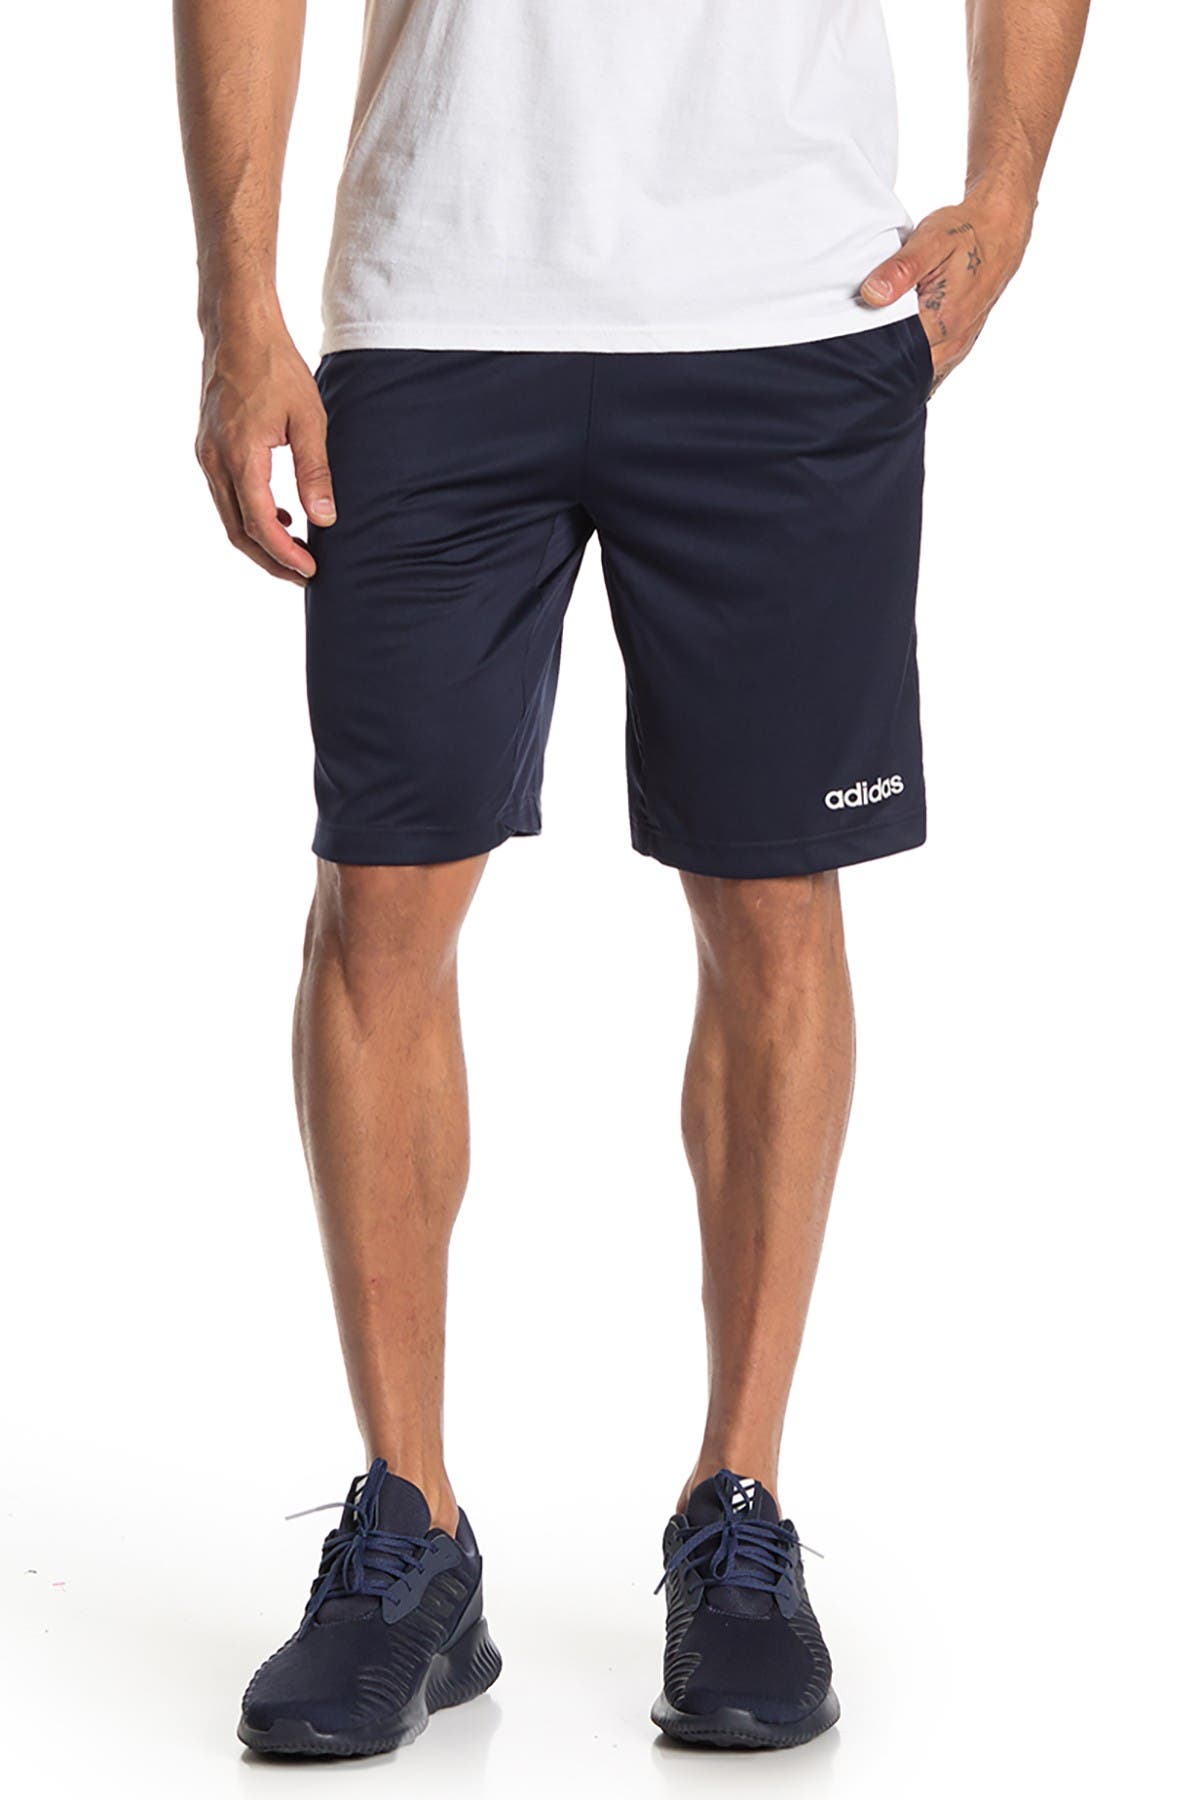 design 2 move climacool shorts